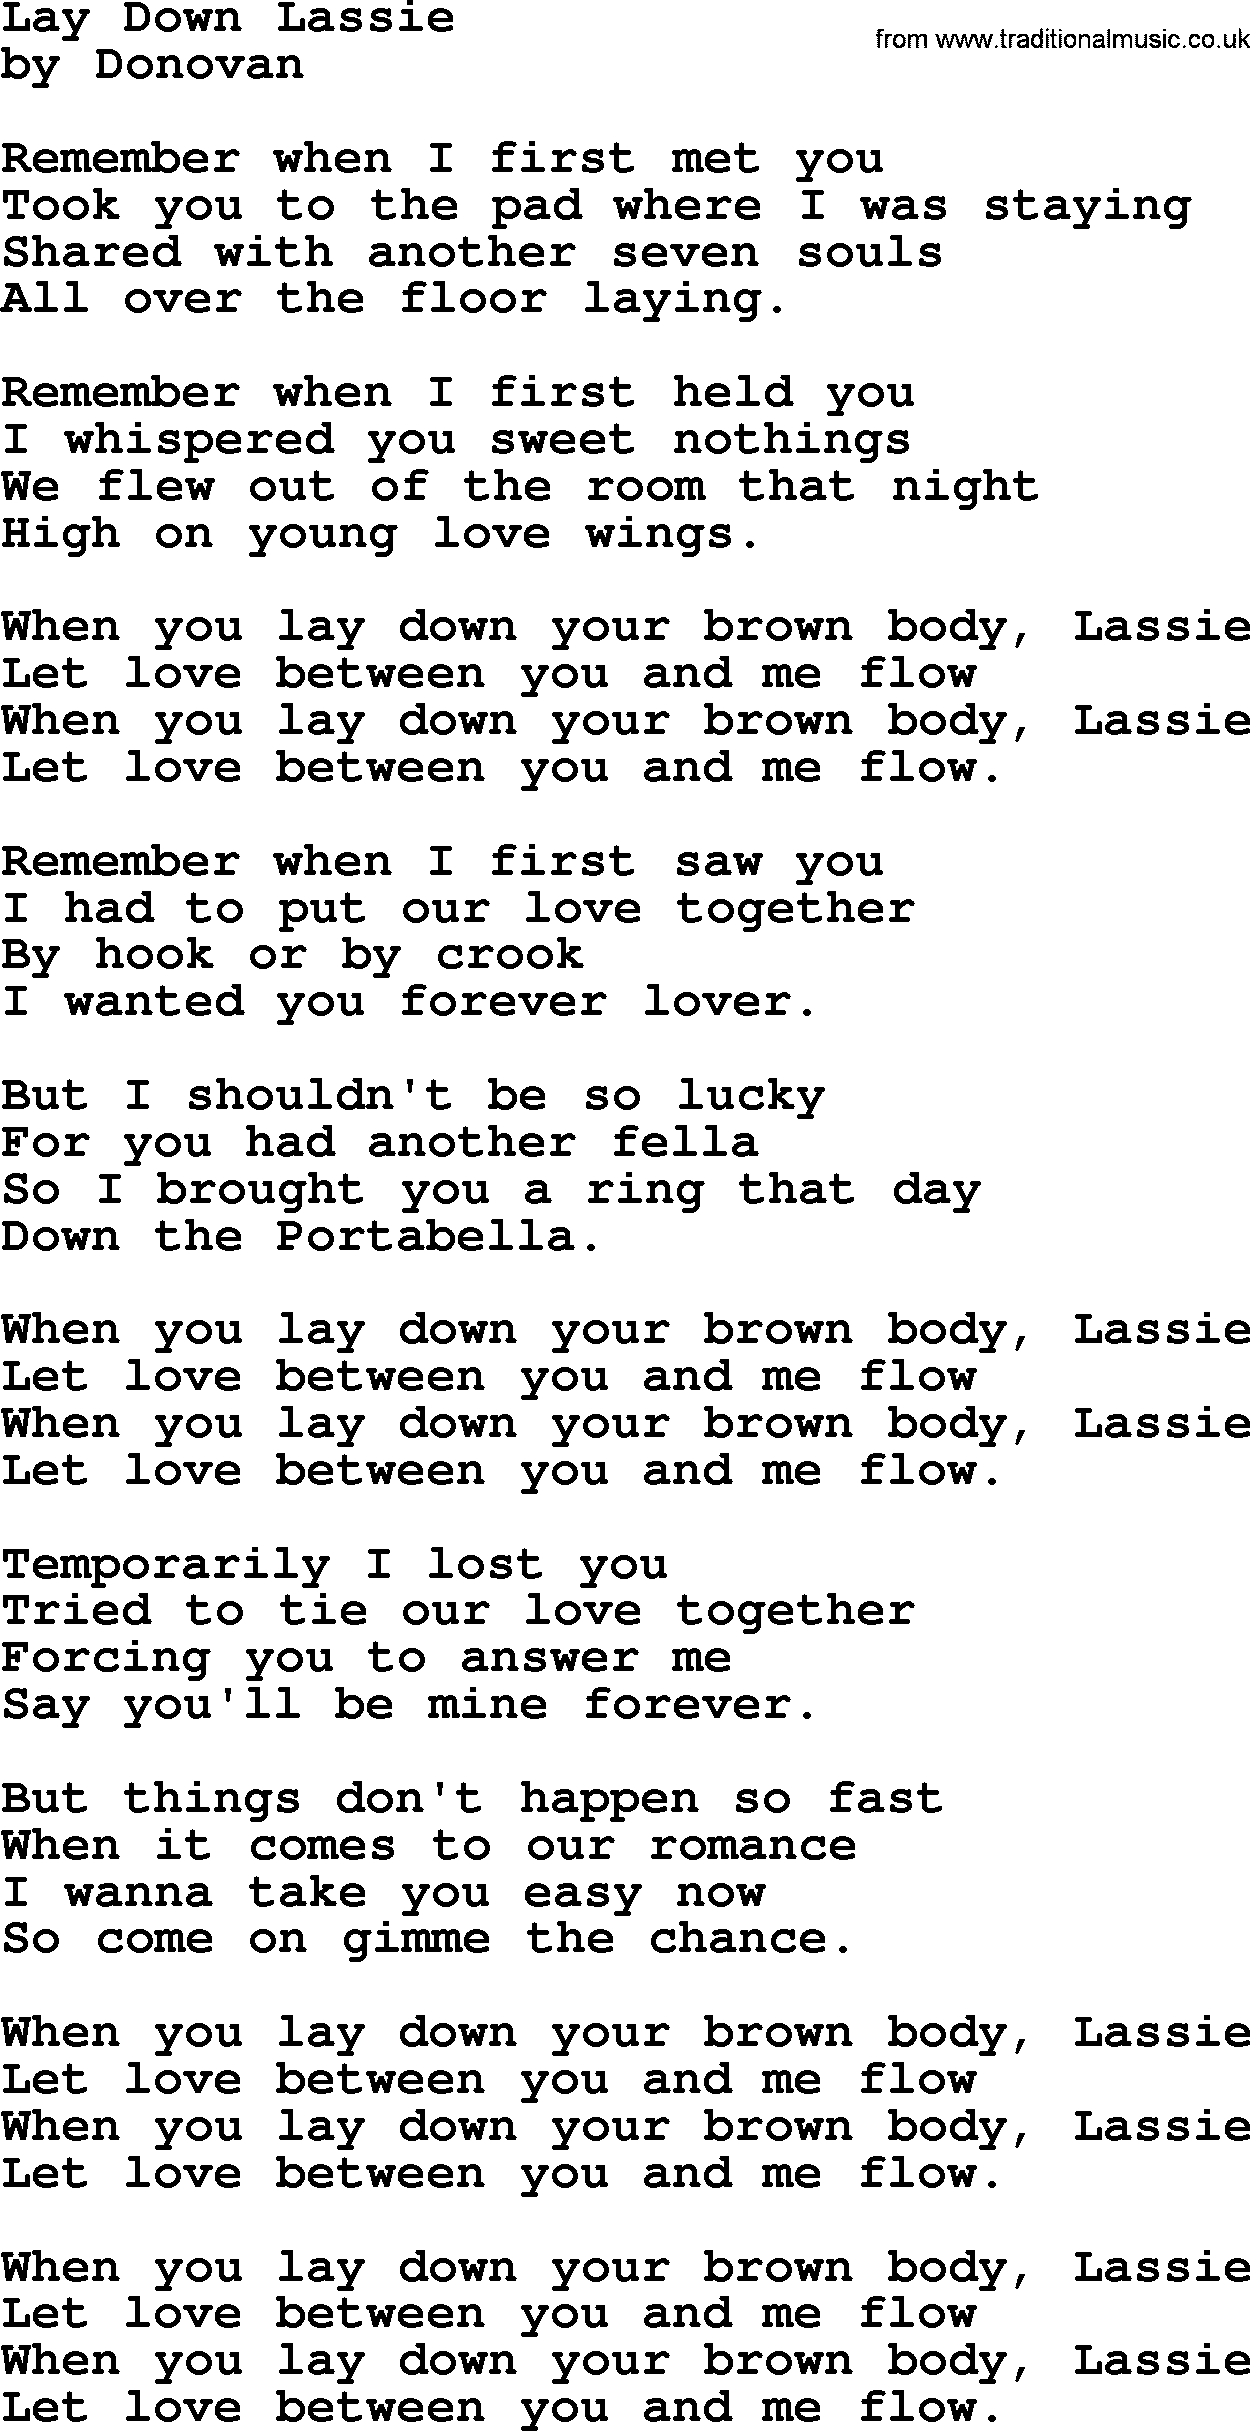 Donovan Leitch song: Lay Down Lassie lyrics